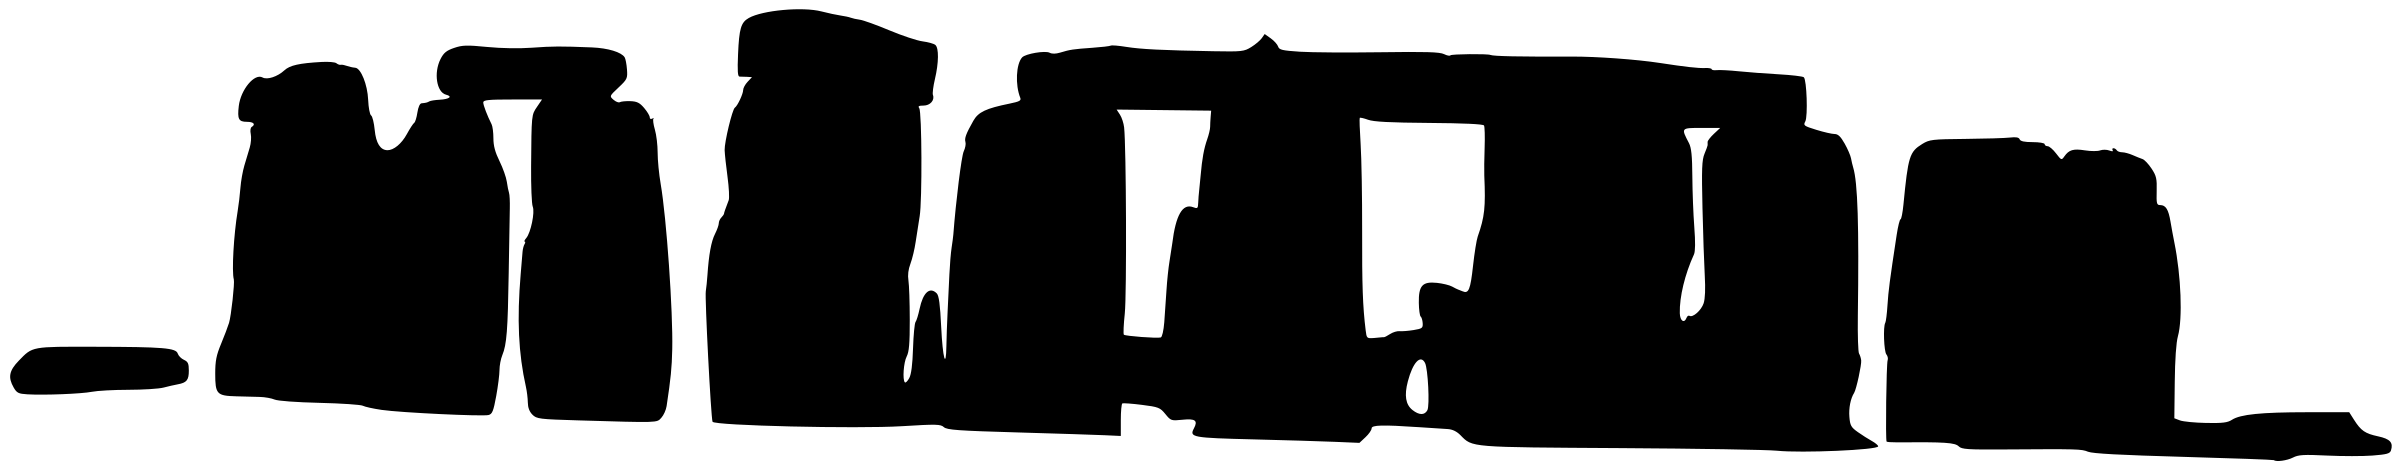 Clipart - Stonehenge (silhouette)